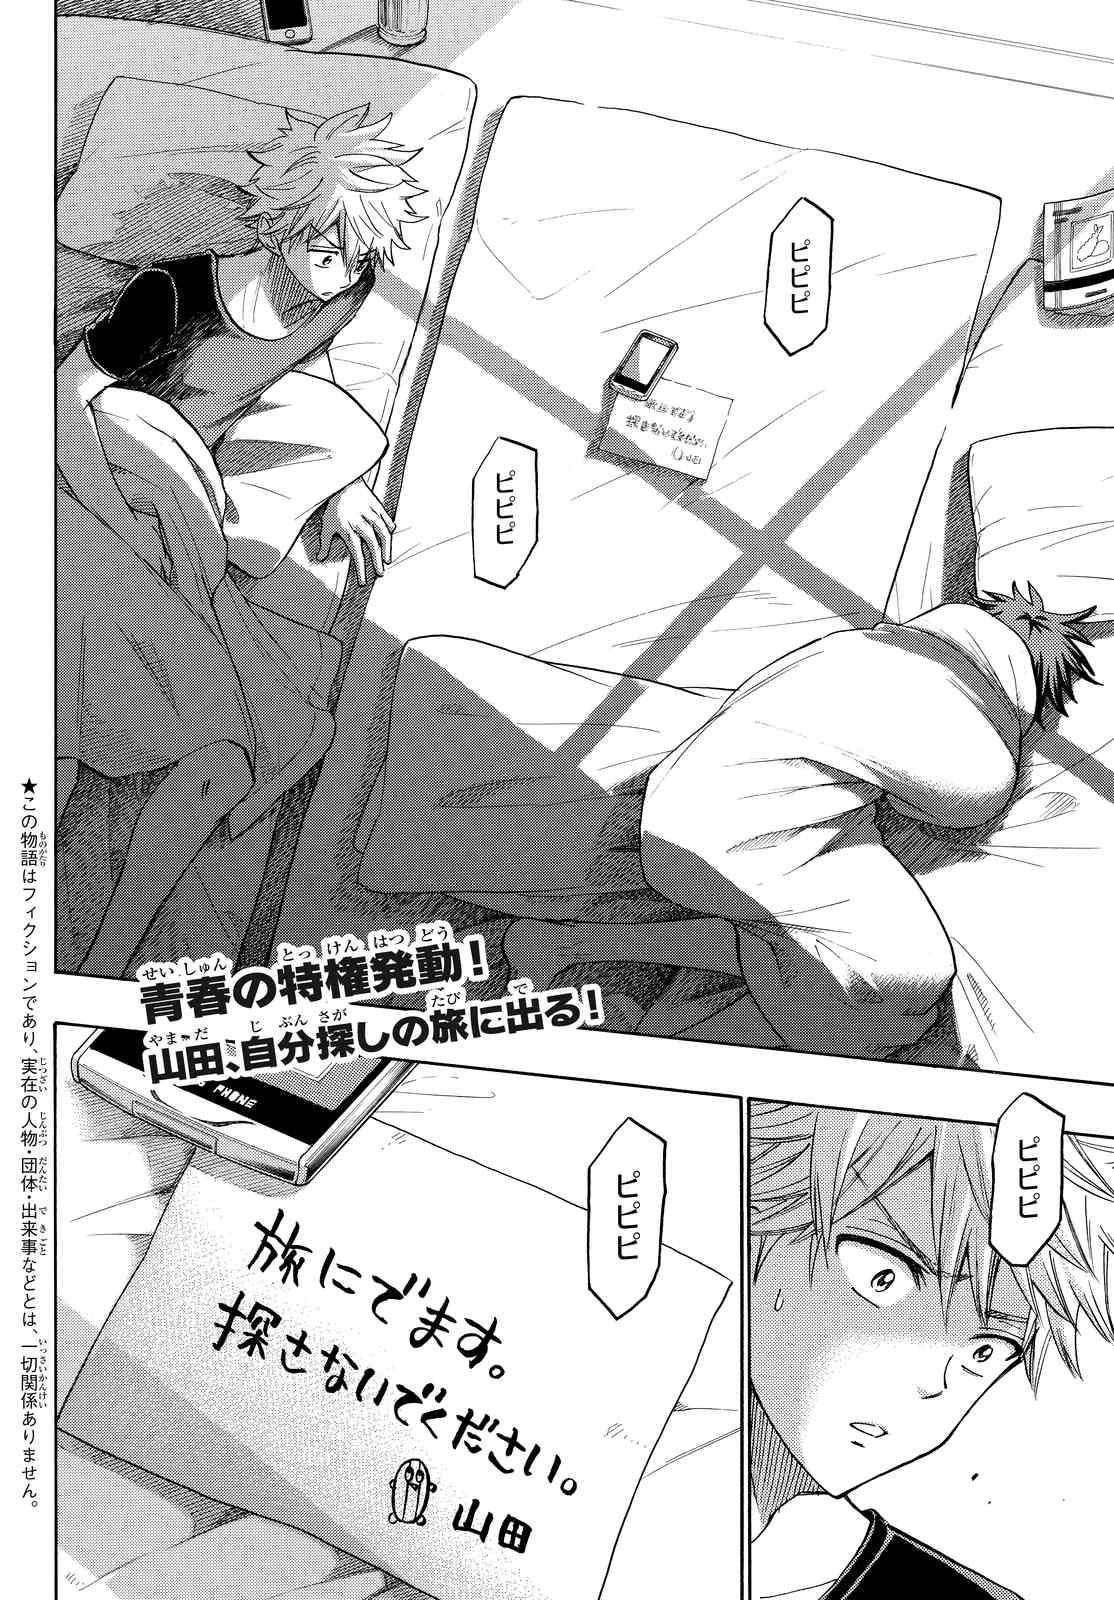 Yamada-kun to 7-nin no Majo - Chapter 228 - Page 2